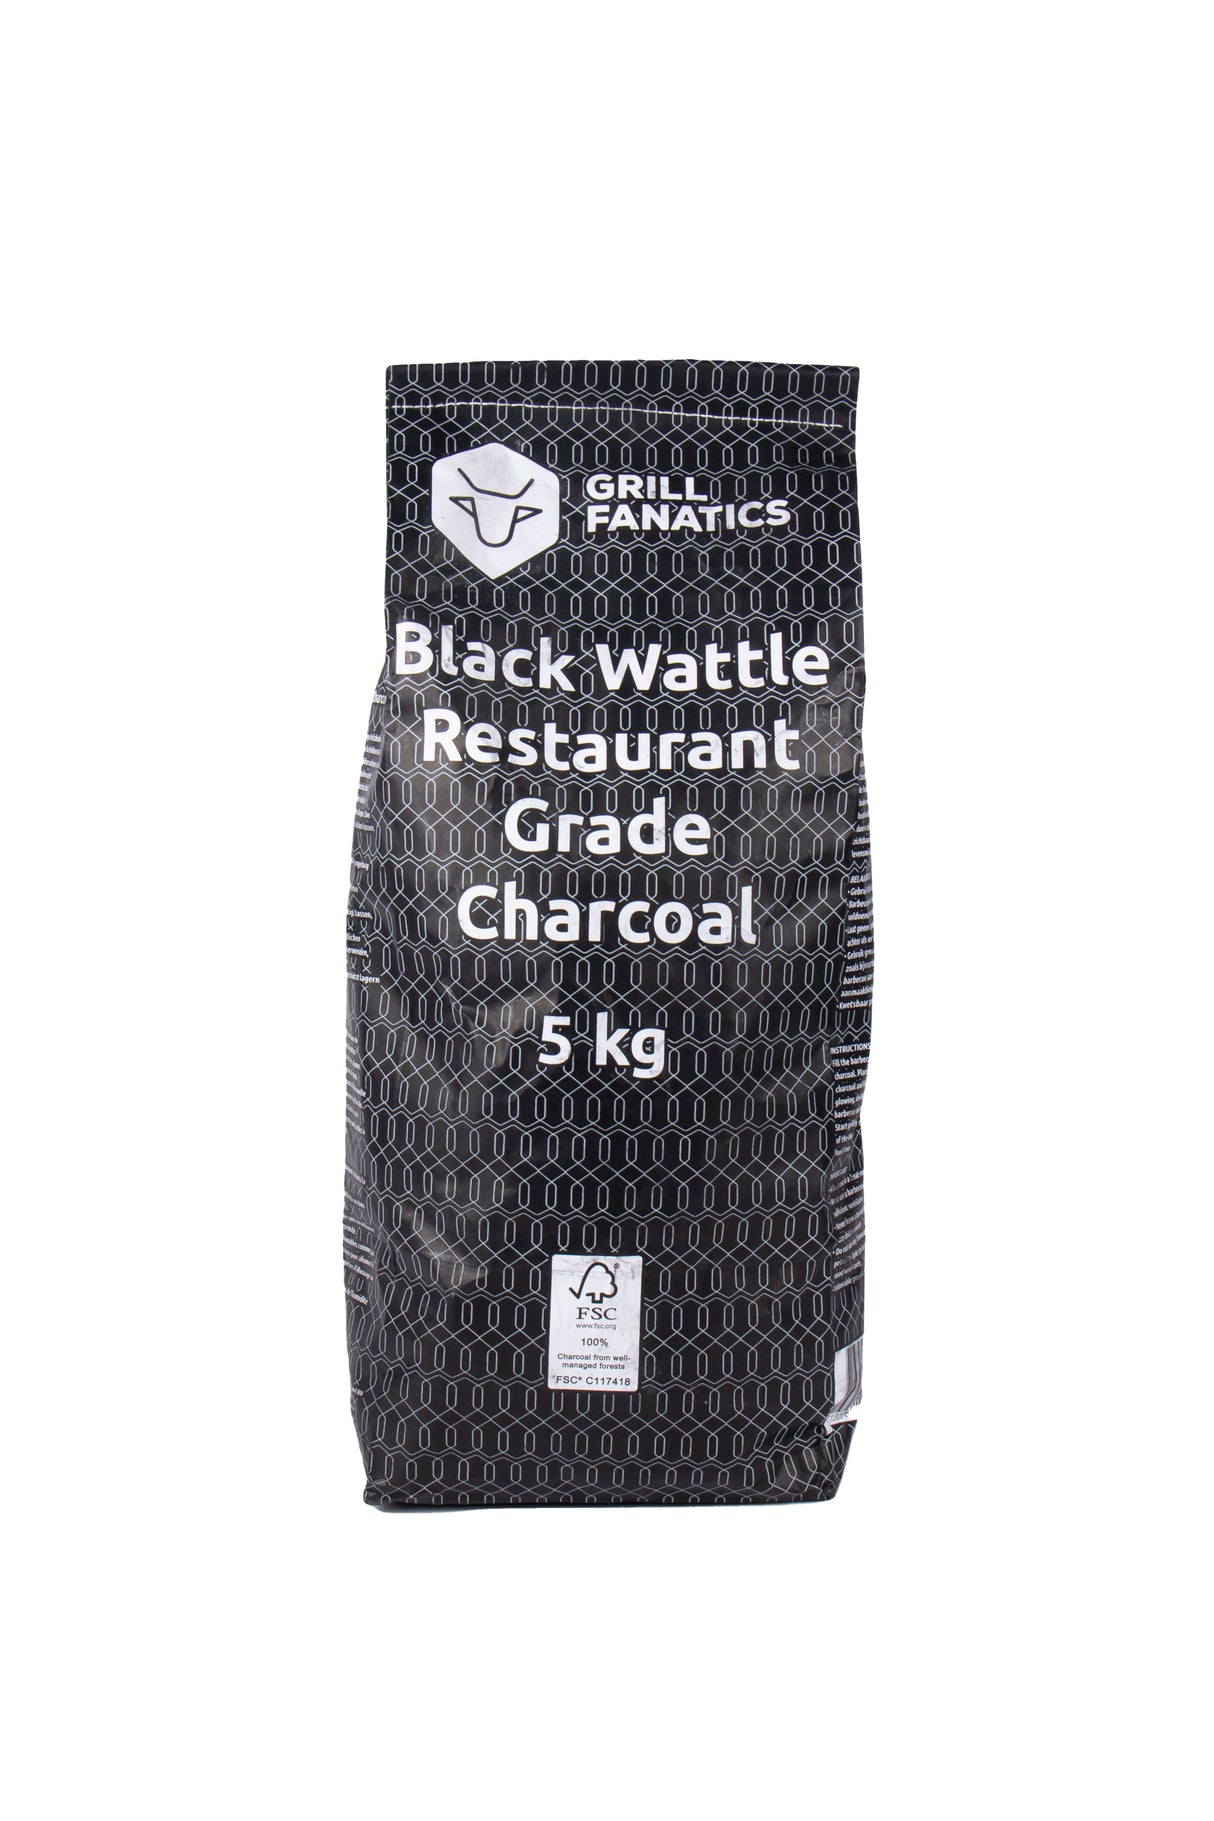 Grill Fanatics Marobu Charcoal - 5Kg Bag